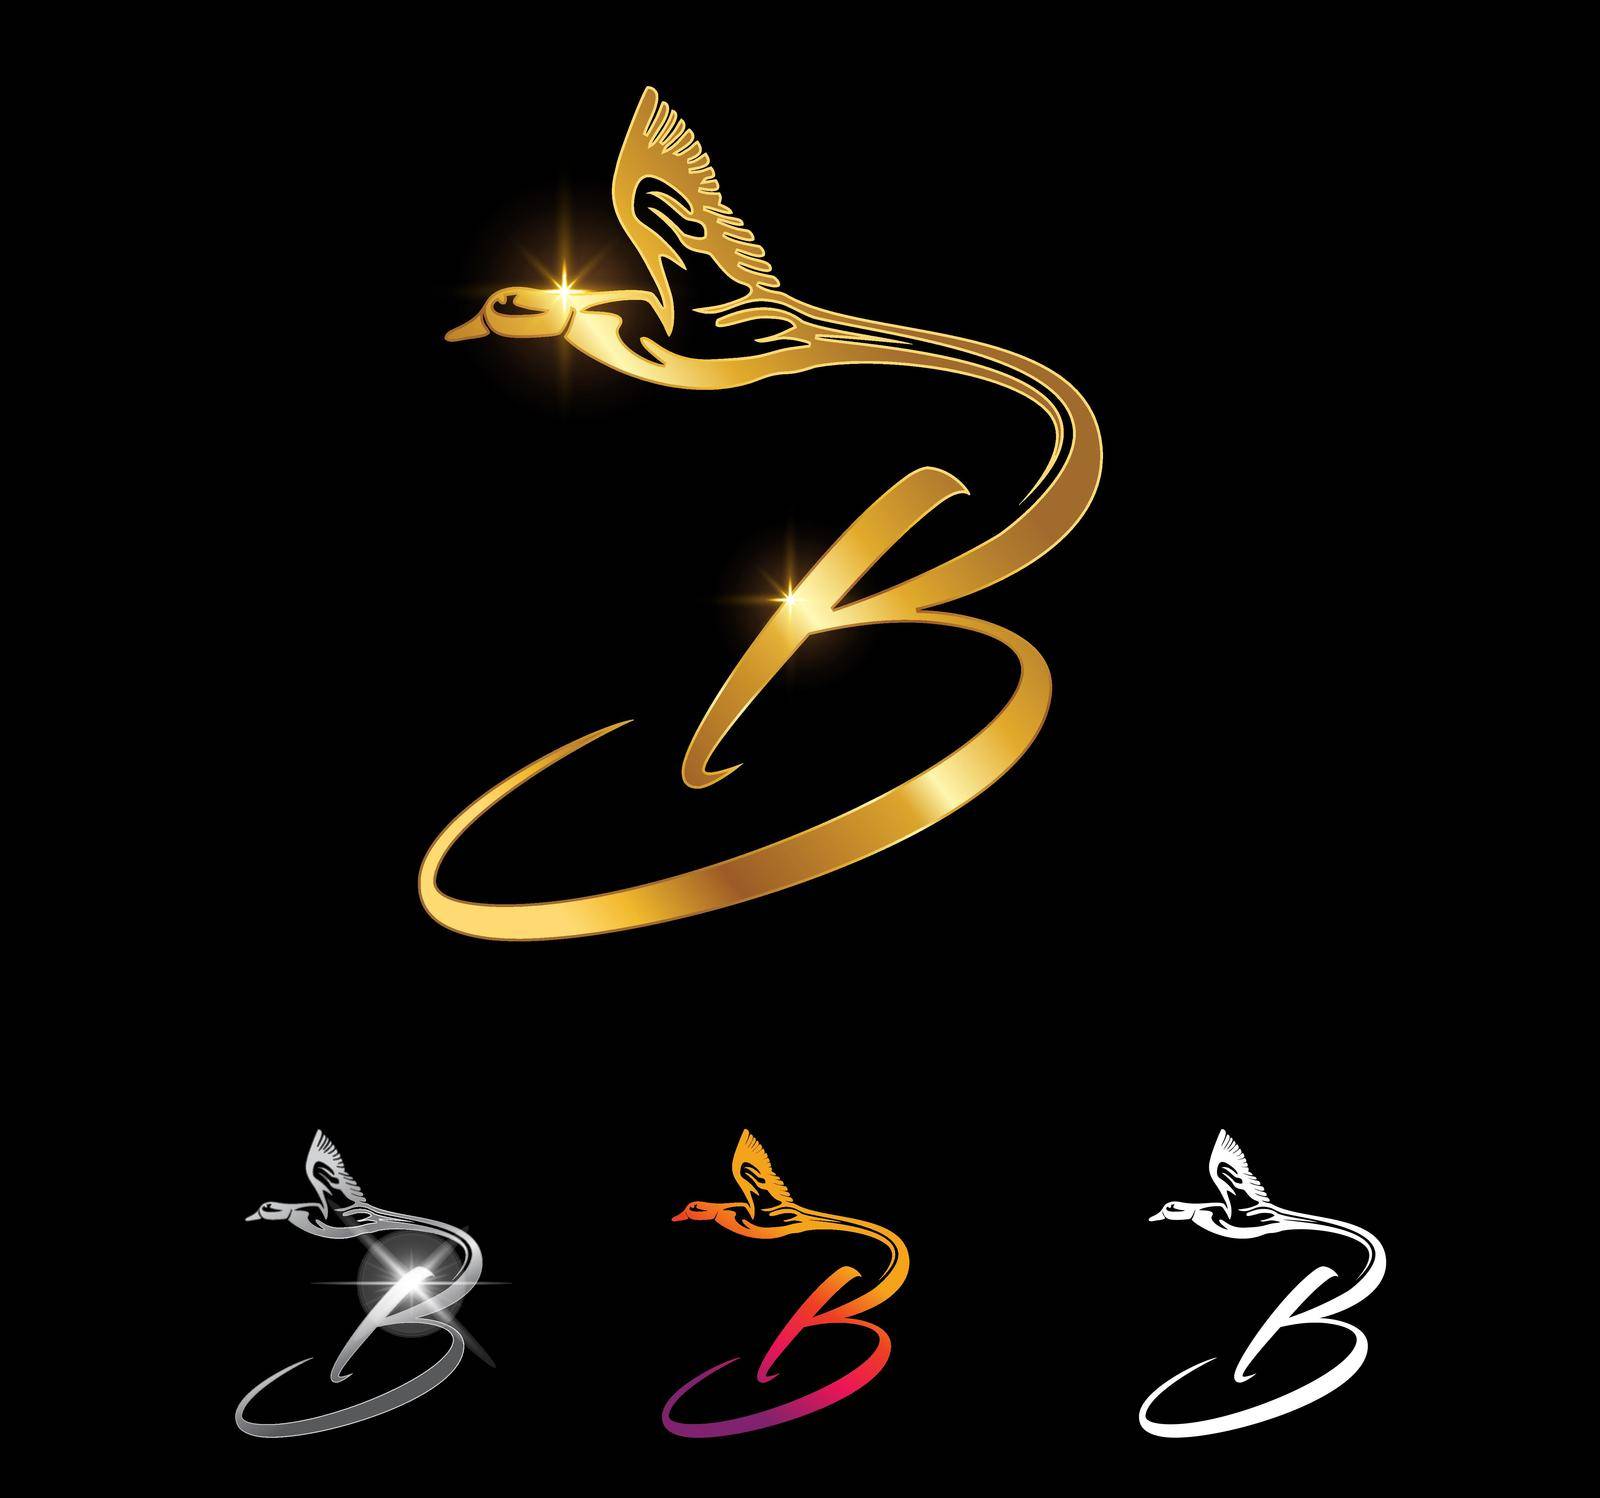 A Vector ILlustration set of Golden Duck Monogram Initial Letter B